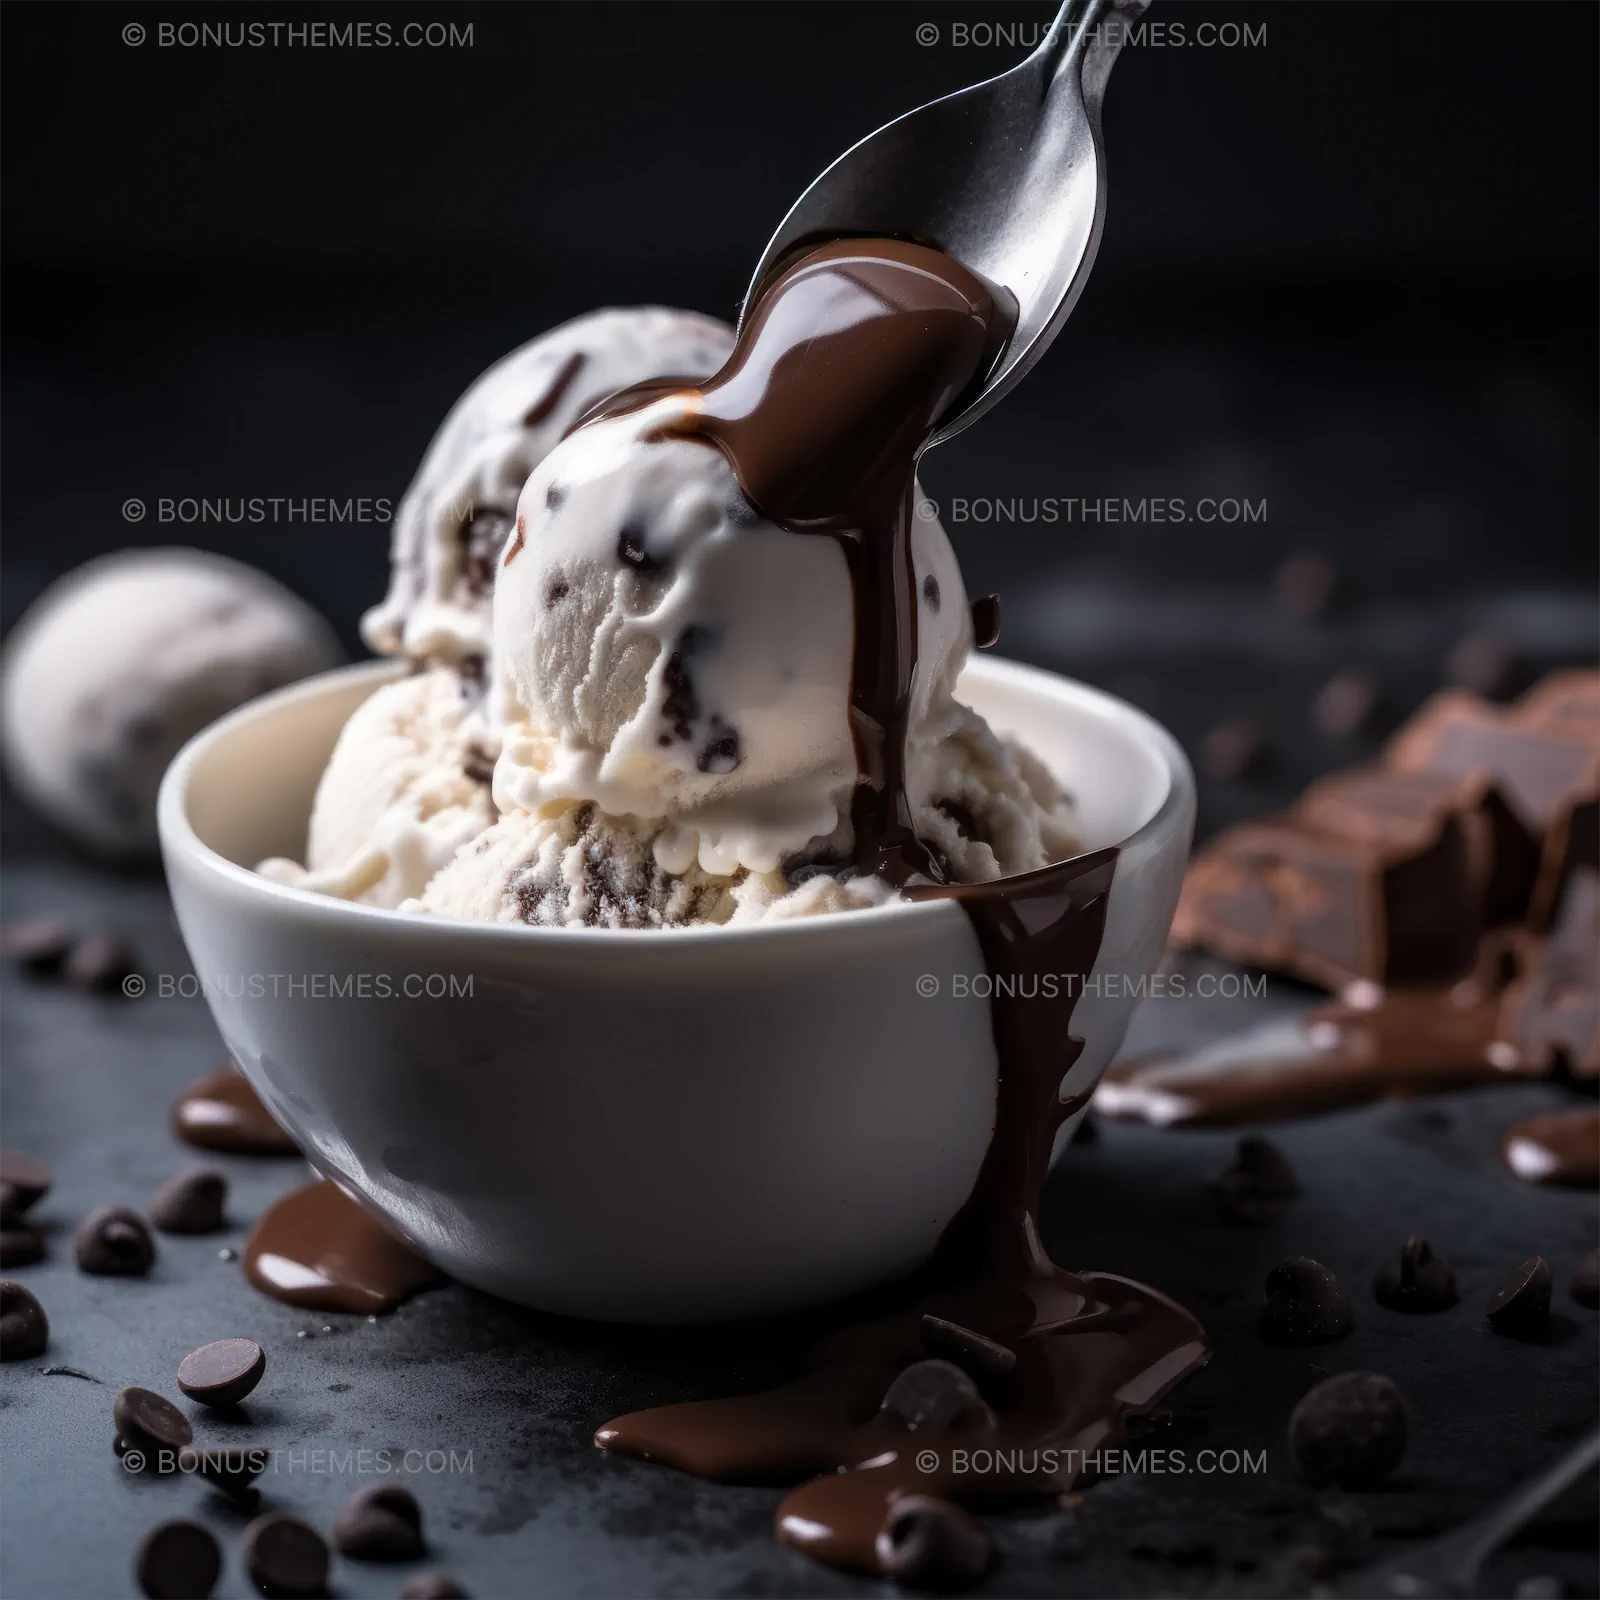 Stracciatella ice cream with chocolate chips